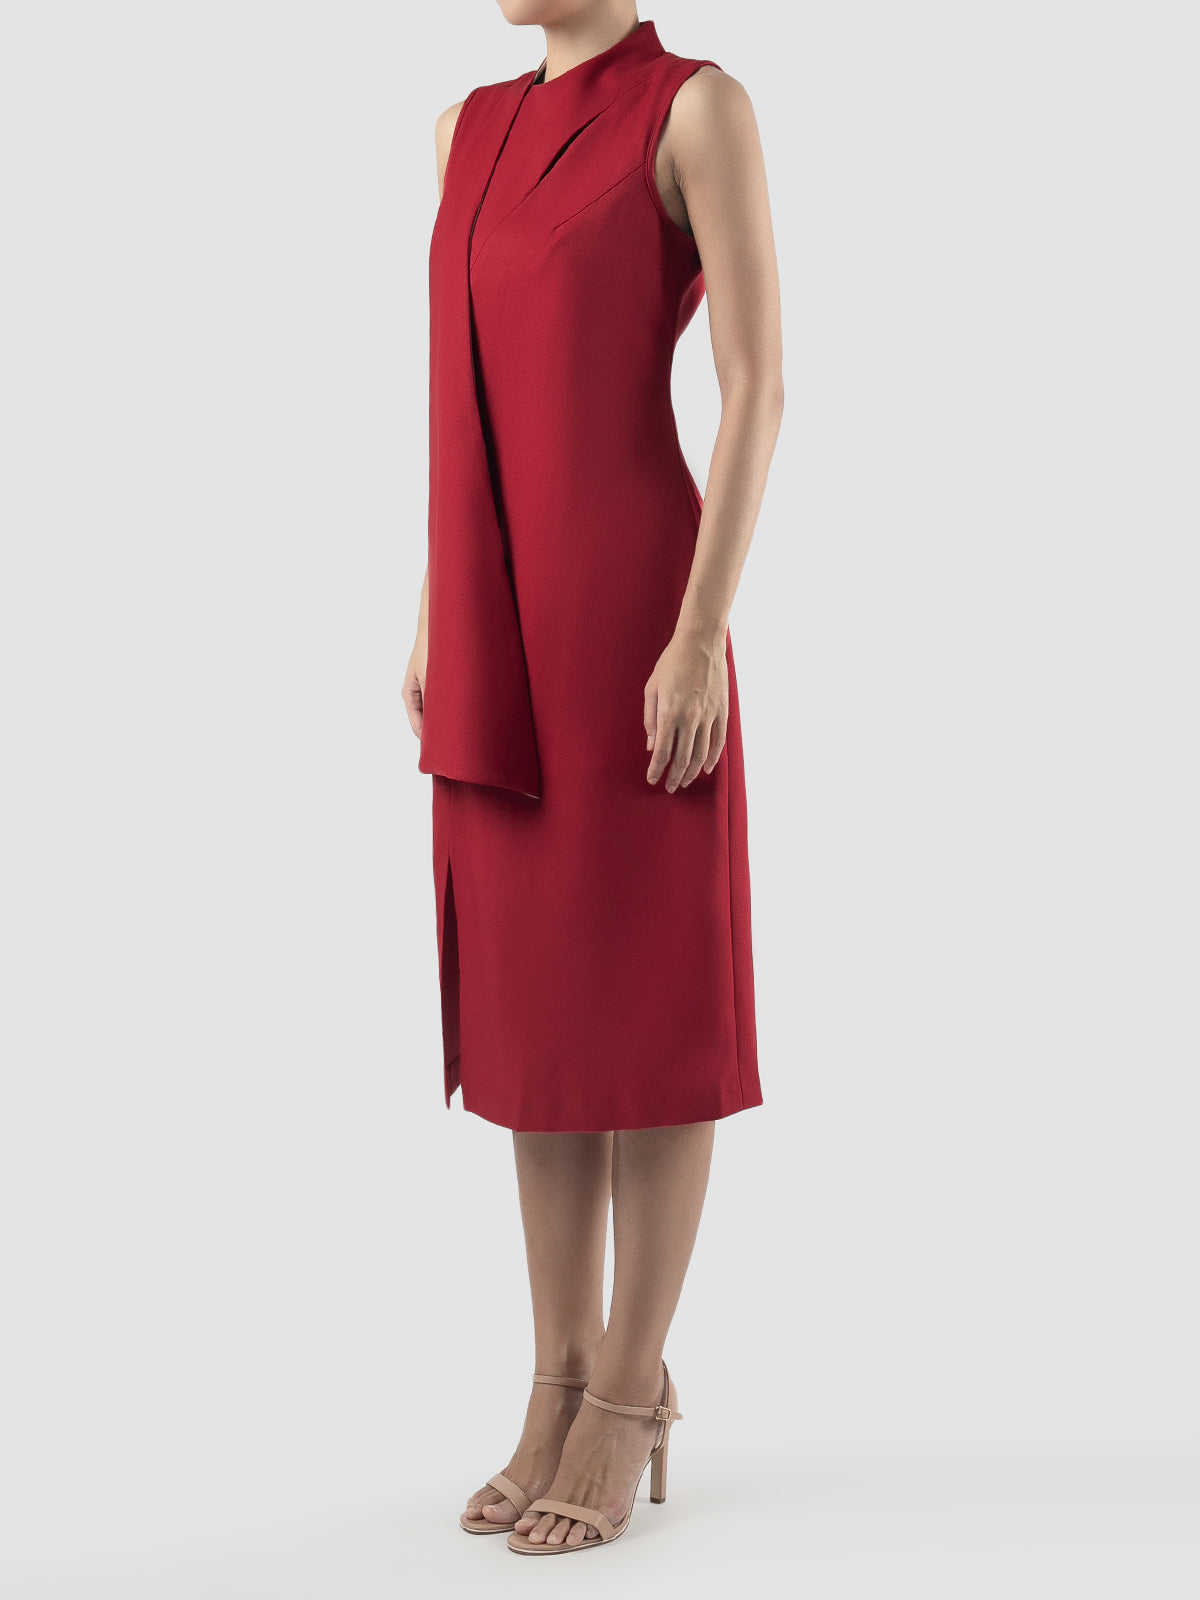 CLARA, Bustier cami red midi dress Just in 3990 LKR #claraclothing